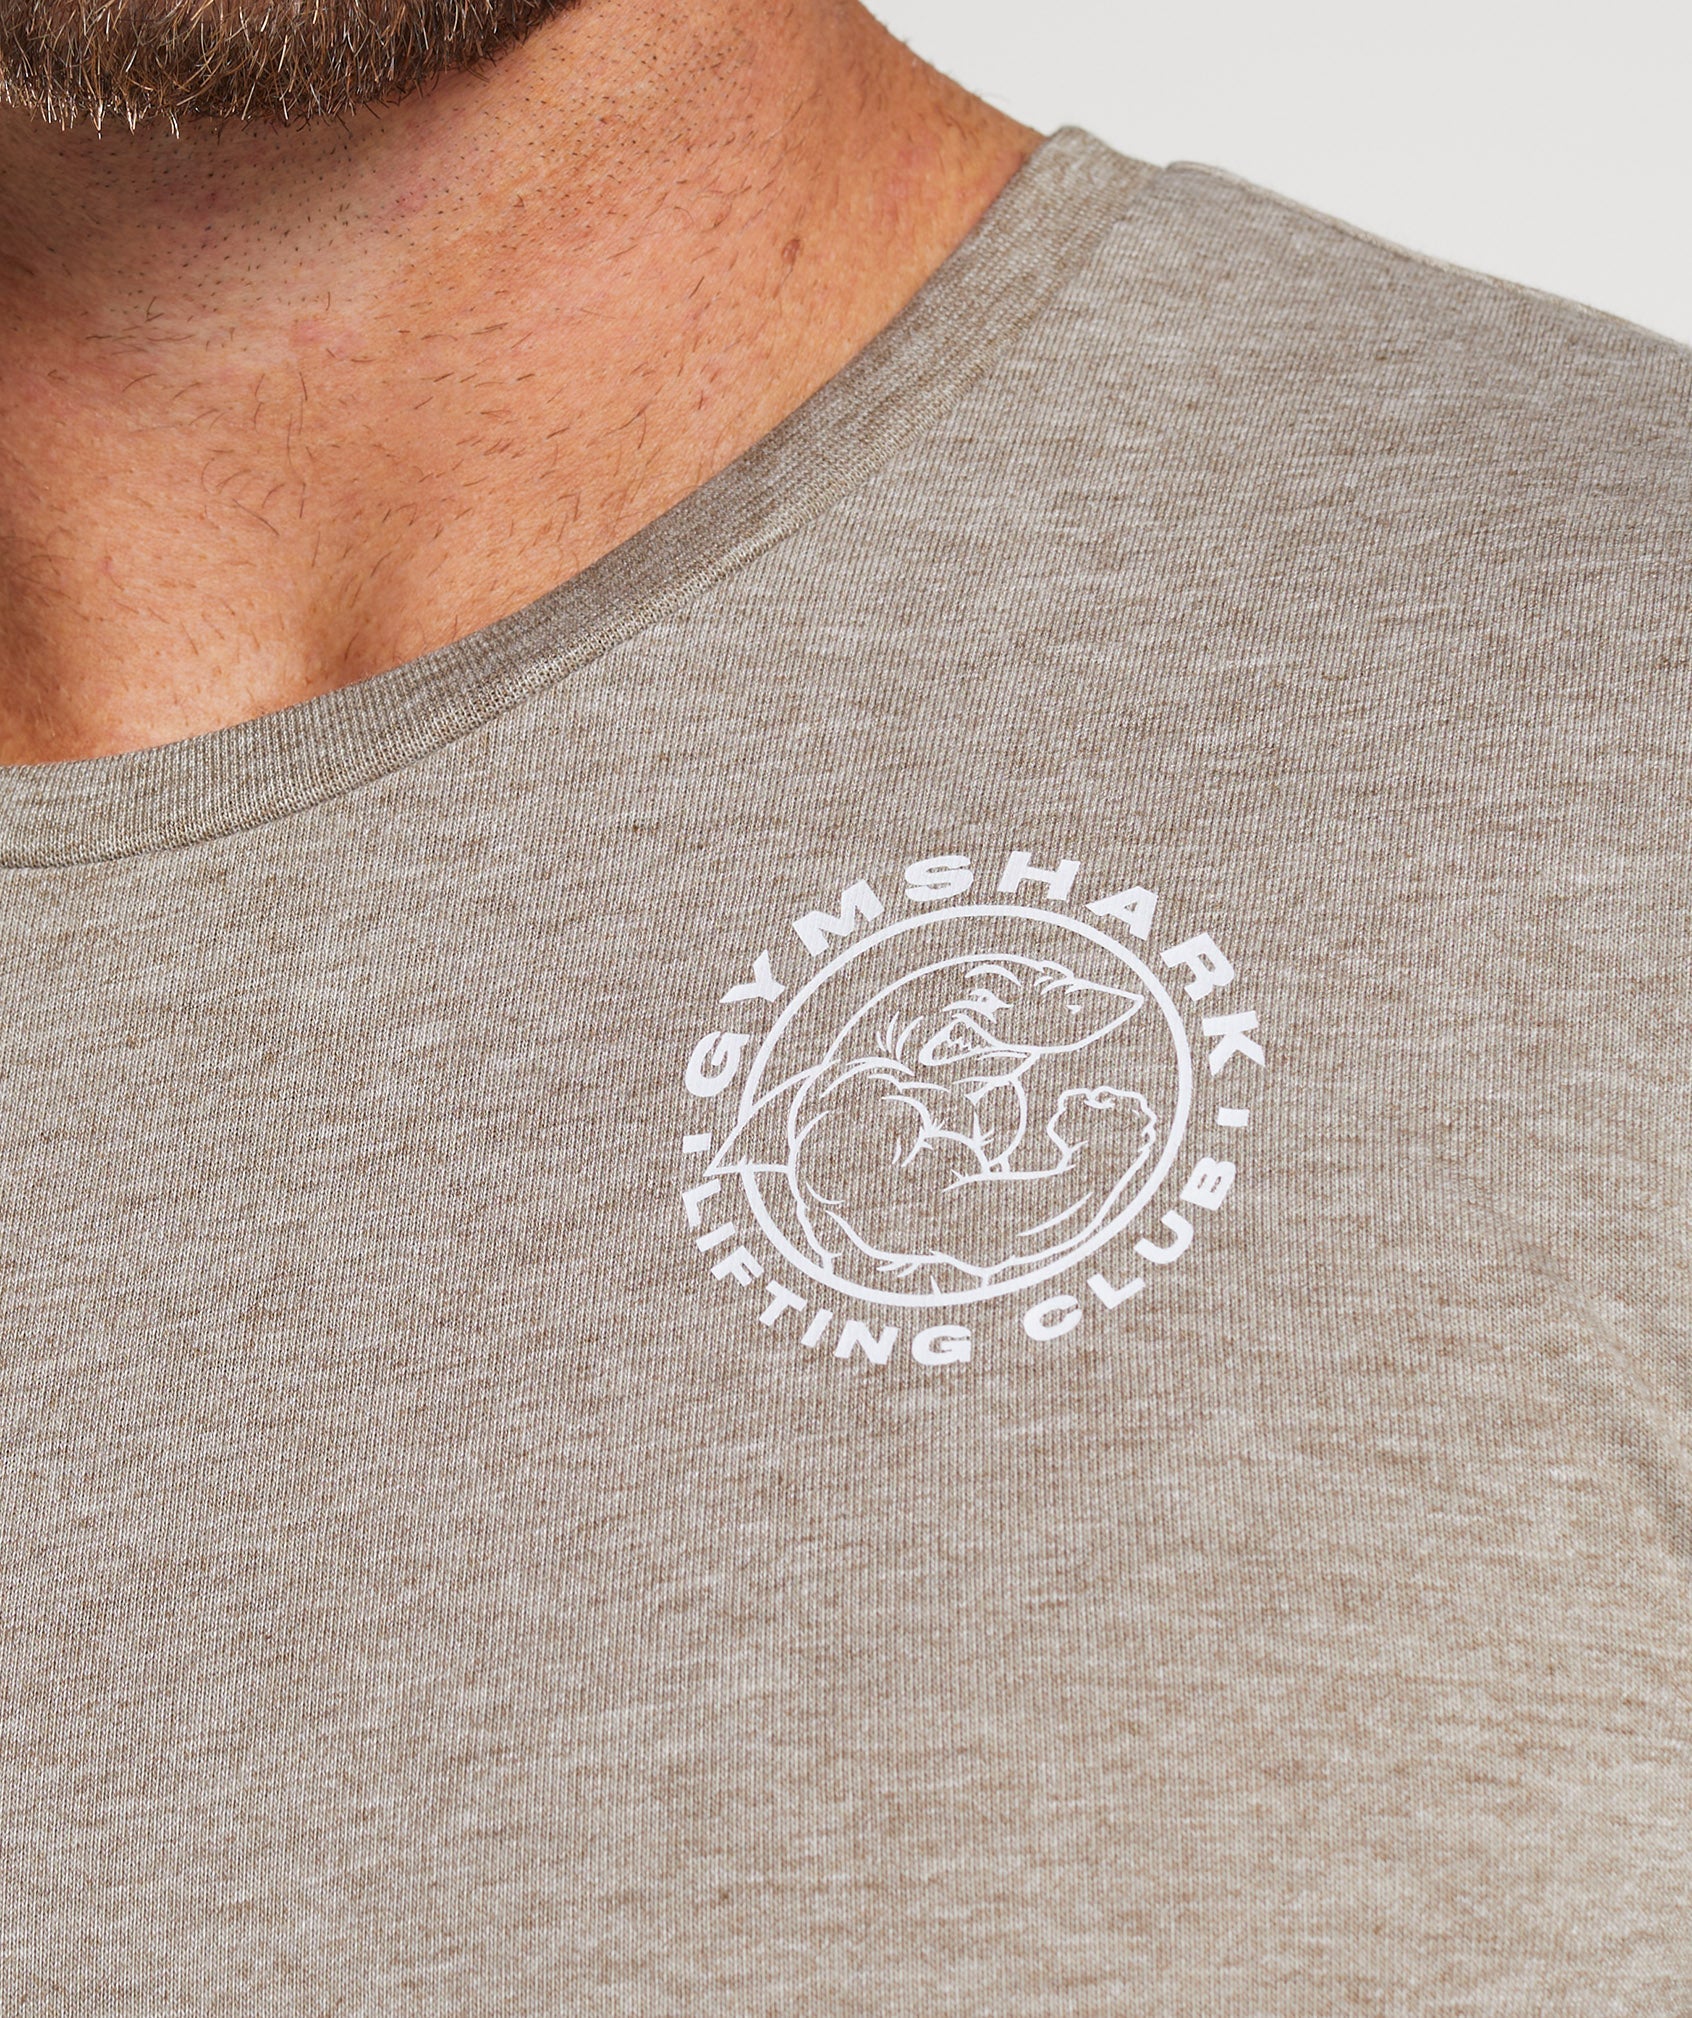 Gymshark Legacy Long Sleeve T-shirts Herren Grau | 7293648-TP